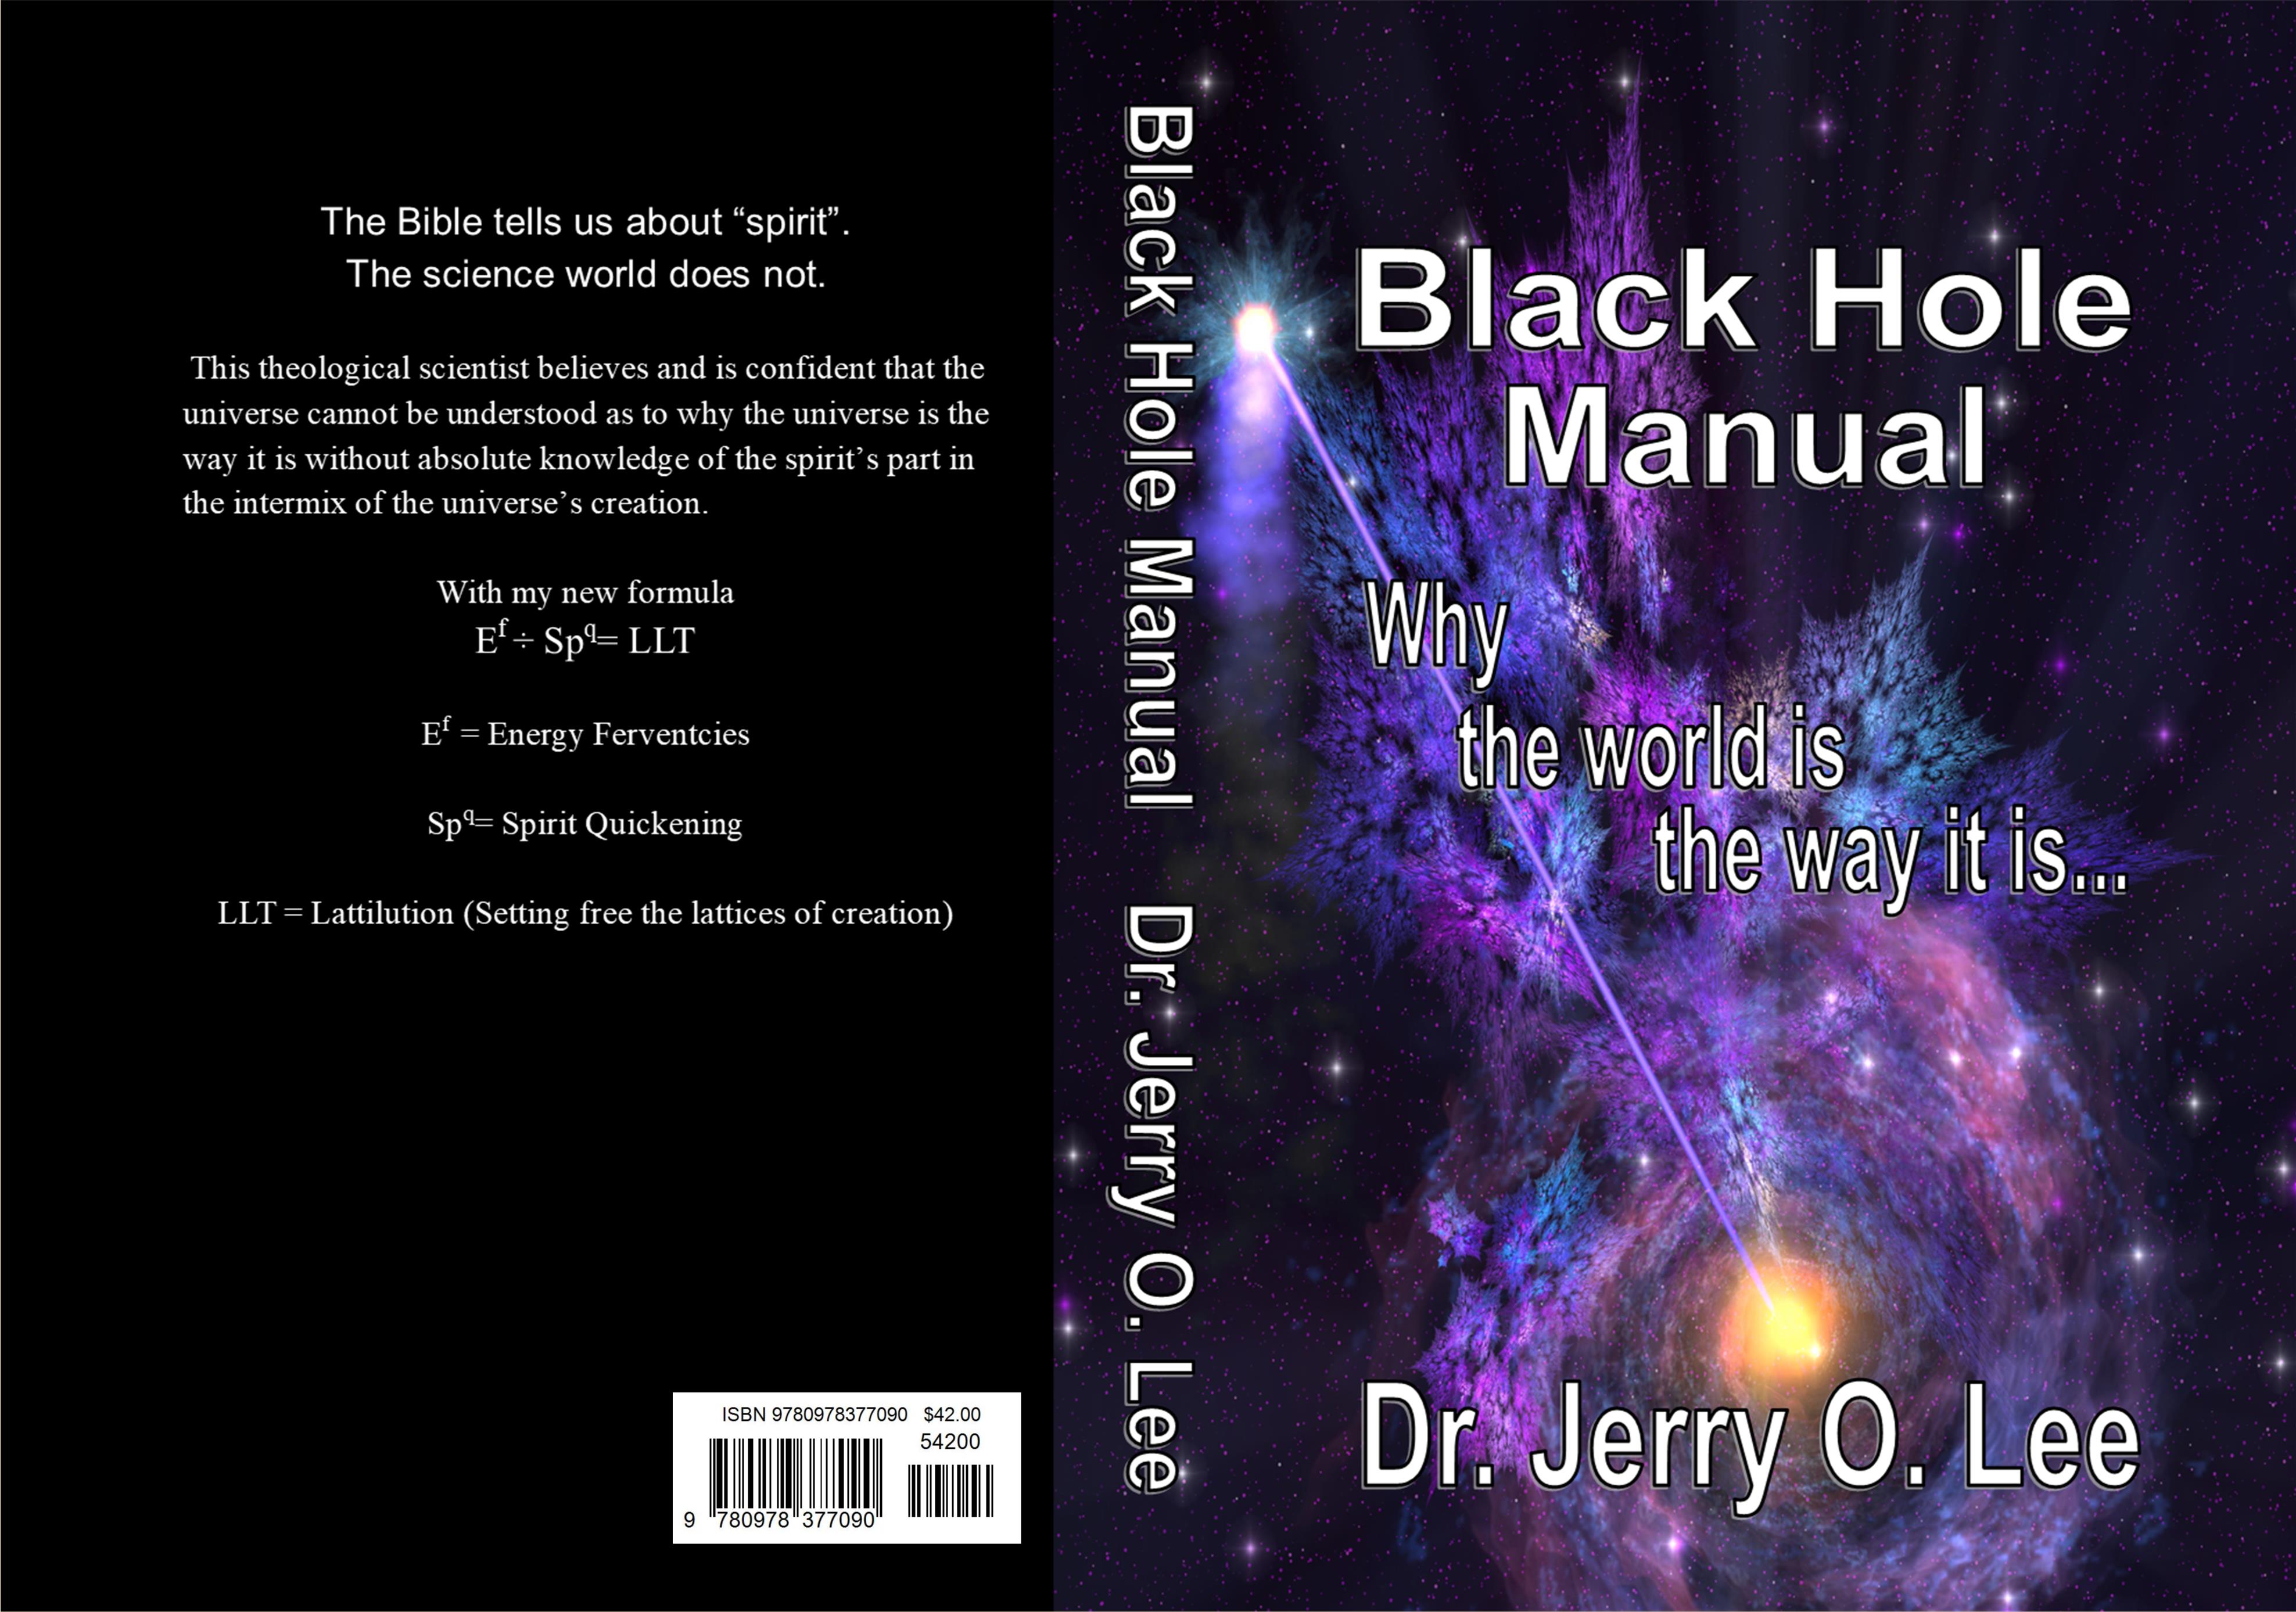 Black Hole Manual cover image